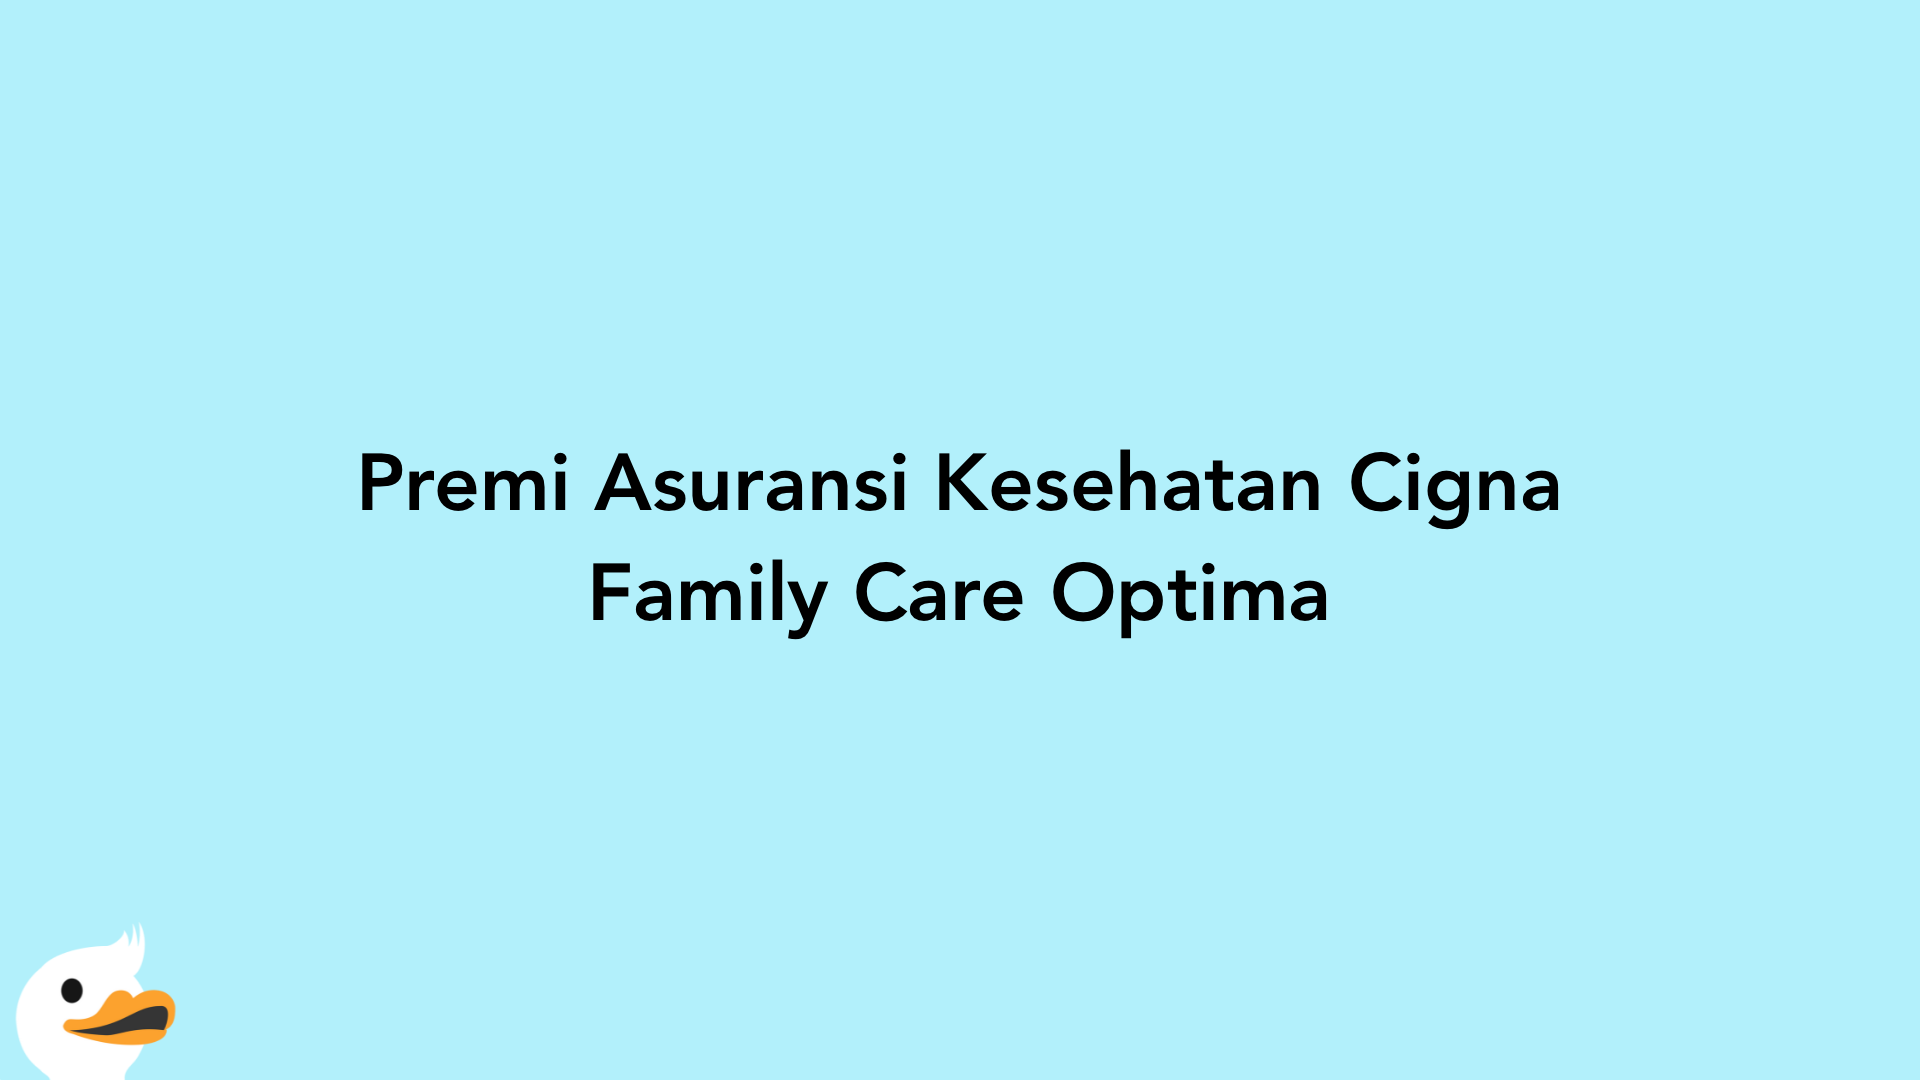 Premi Asuransi Kesehatan Cigna Family Care Optima